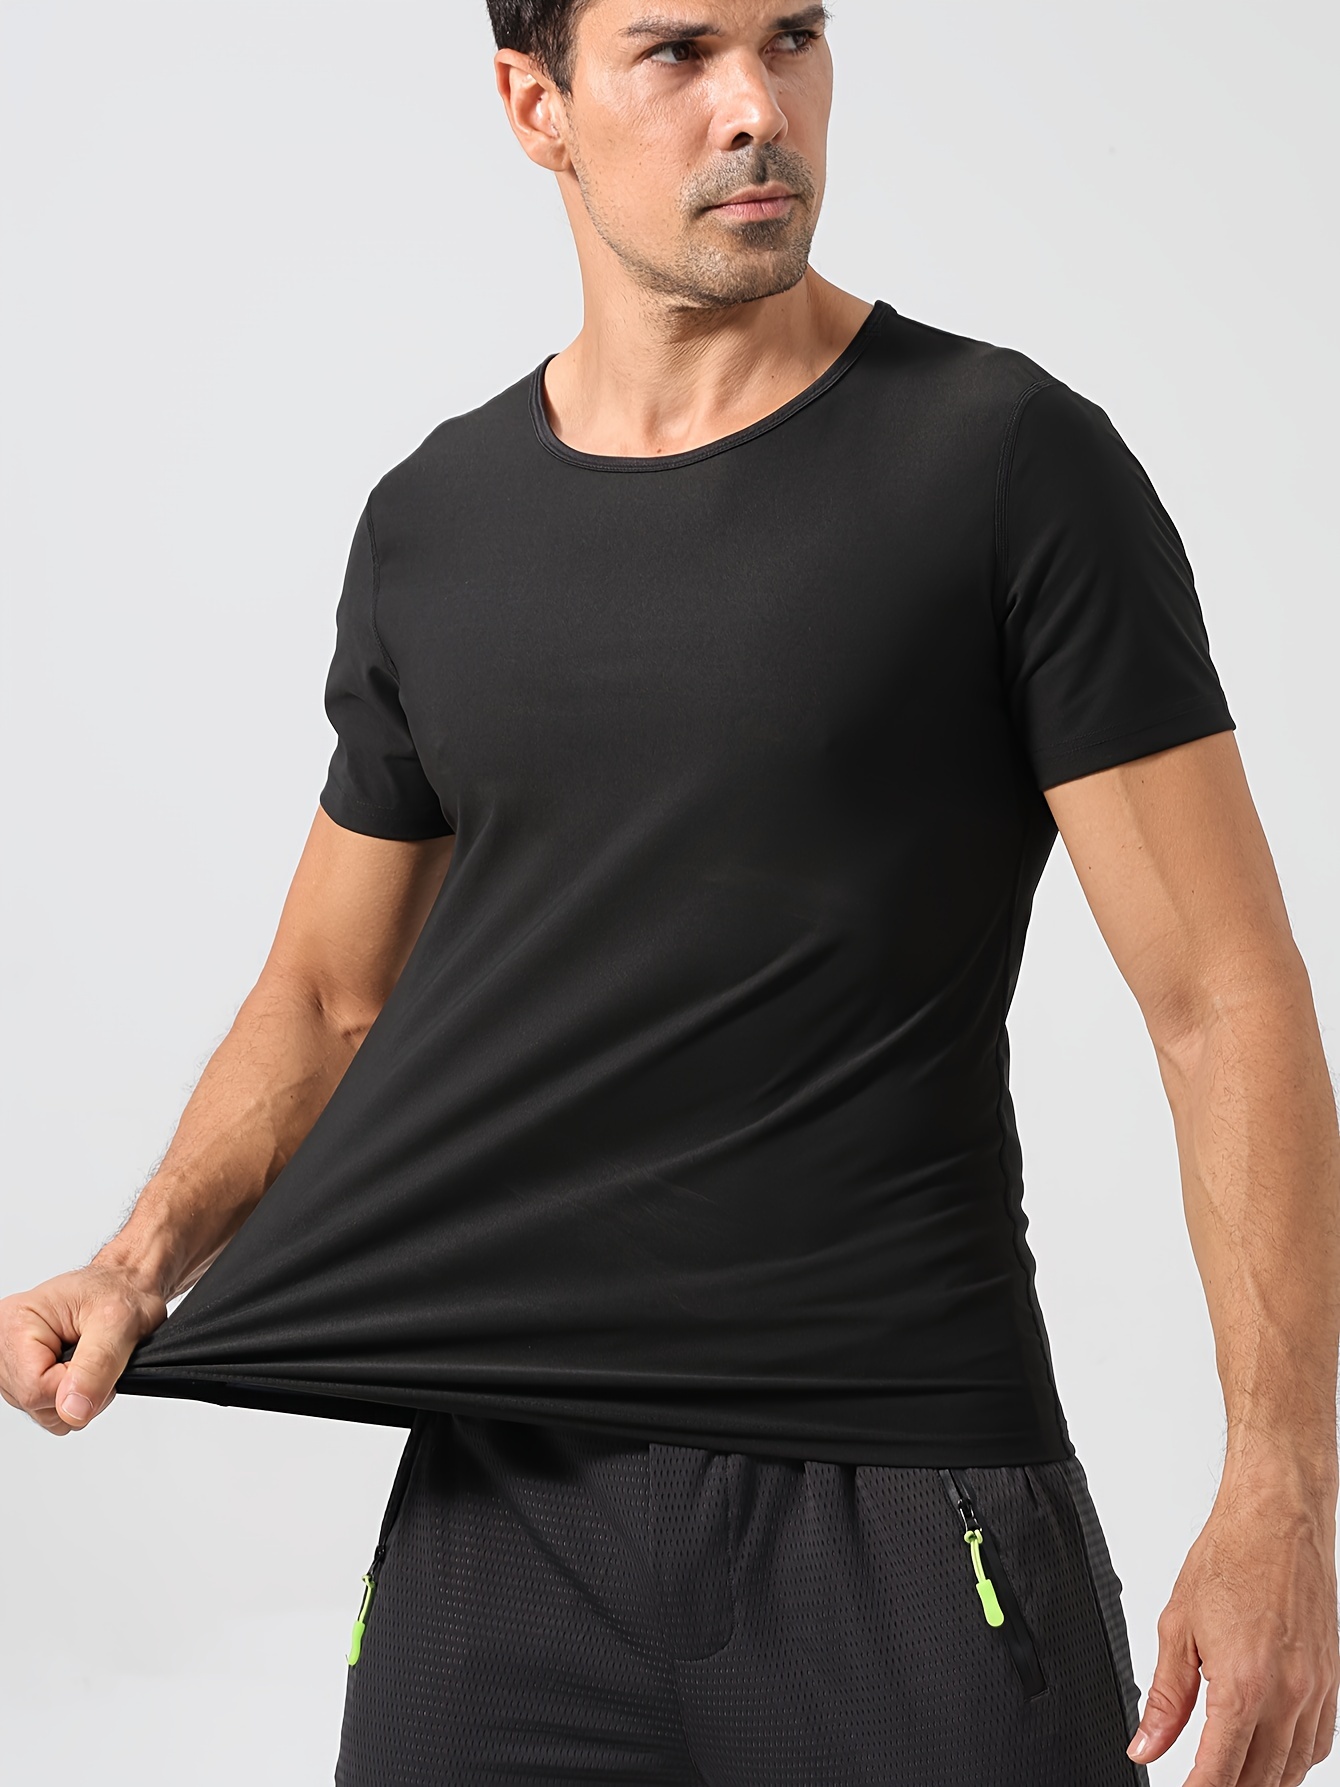 Women Sweat Sauna Vest Body Shaper Top Compression Shirt Workout Fitness  Wearing 